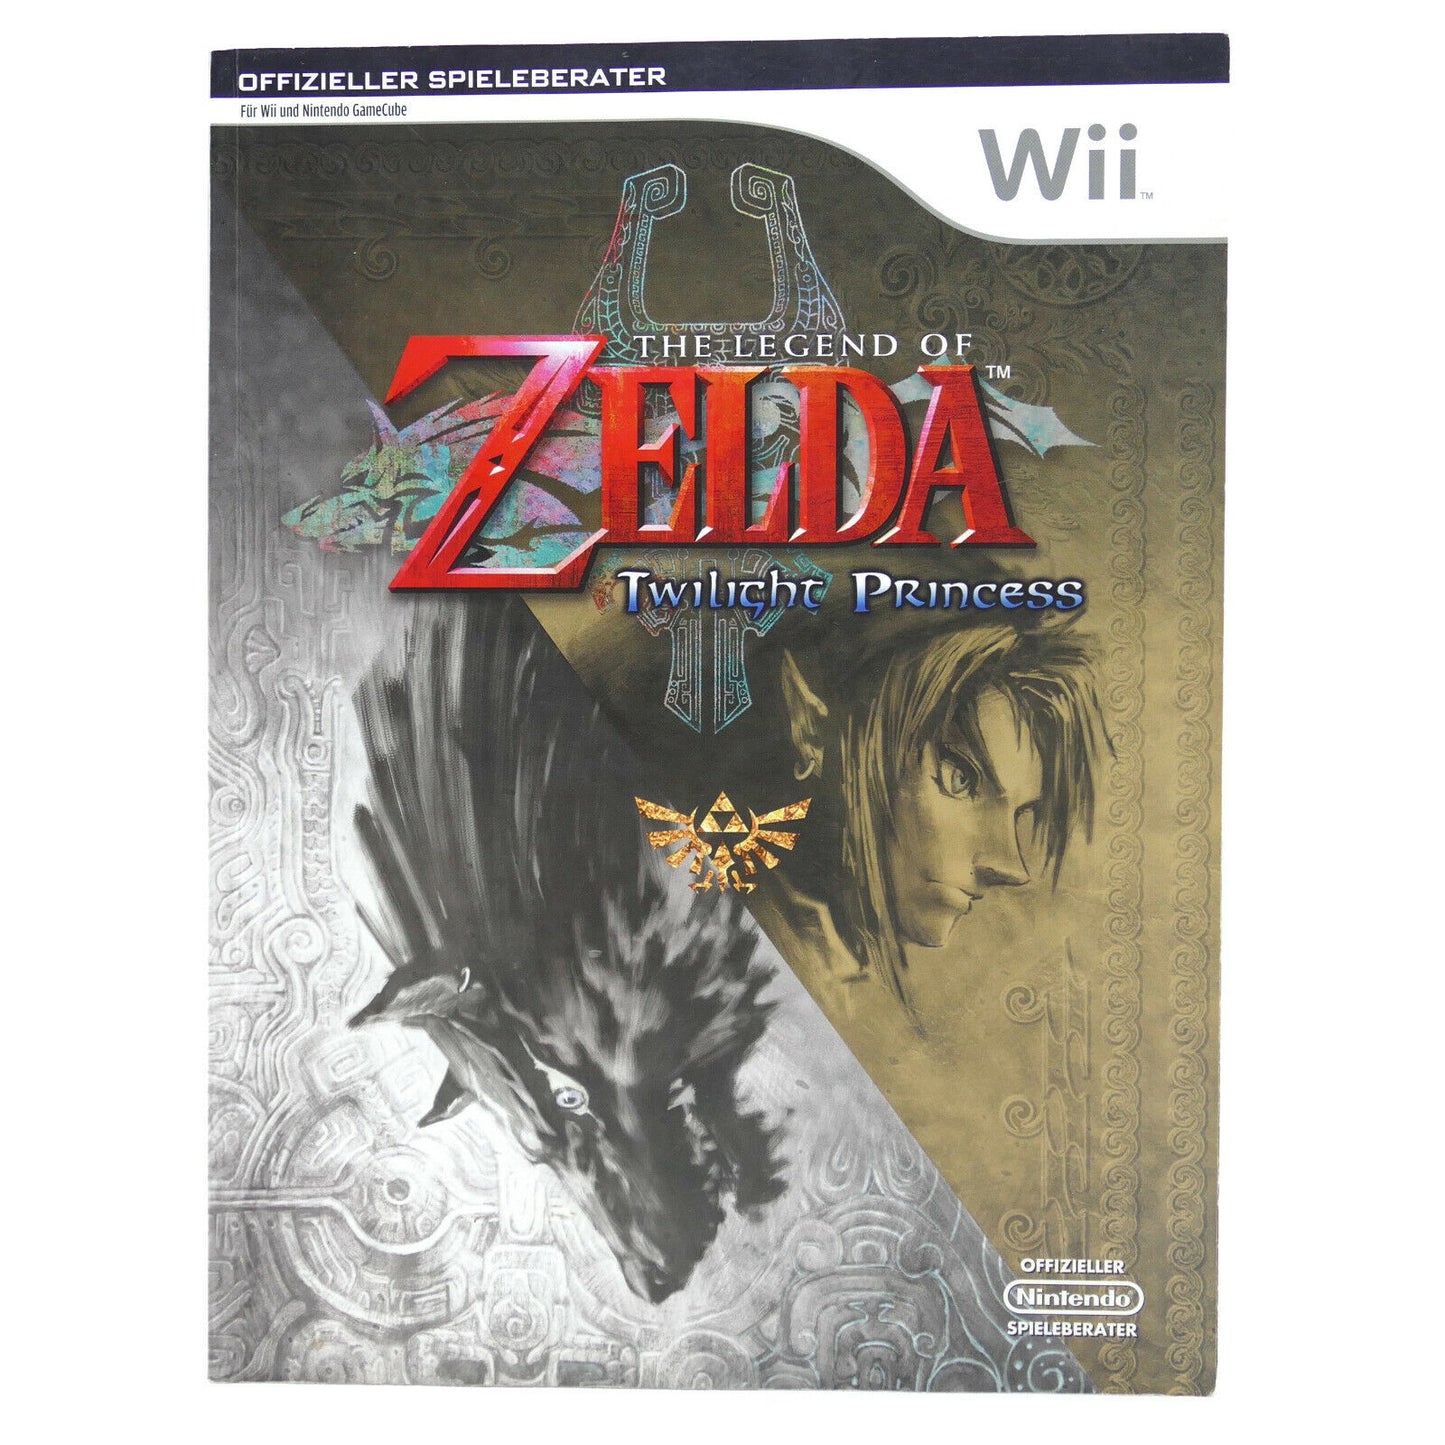 The Legend of Zelda - Twilight Princess Spieleberater